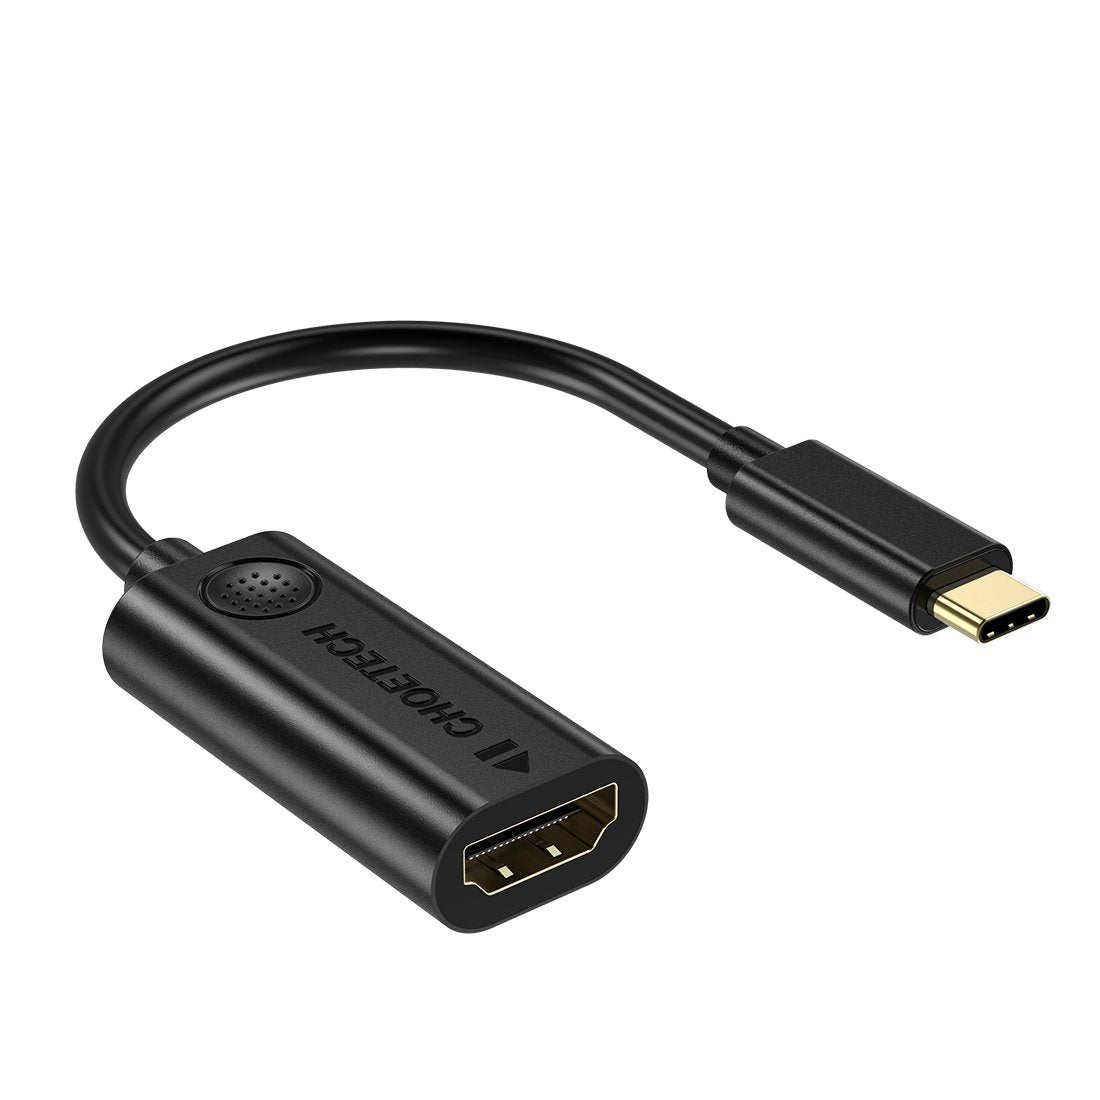 Choetech HUB-H04 USB 3.1 Type C To HDMI Adapter 4K@60Hz Thunderbolt 3 USB C Hub HDMI